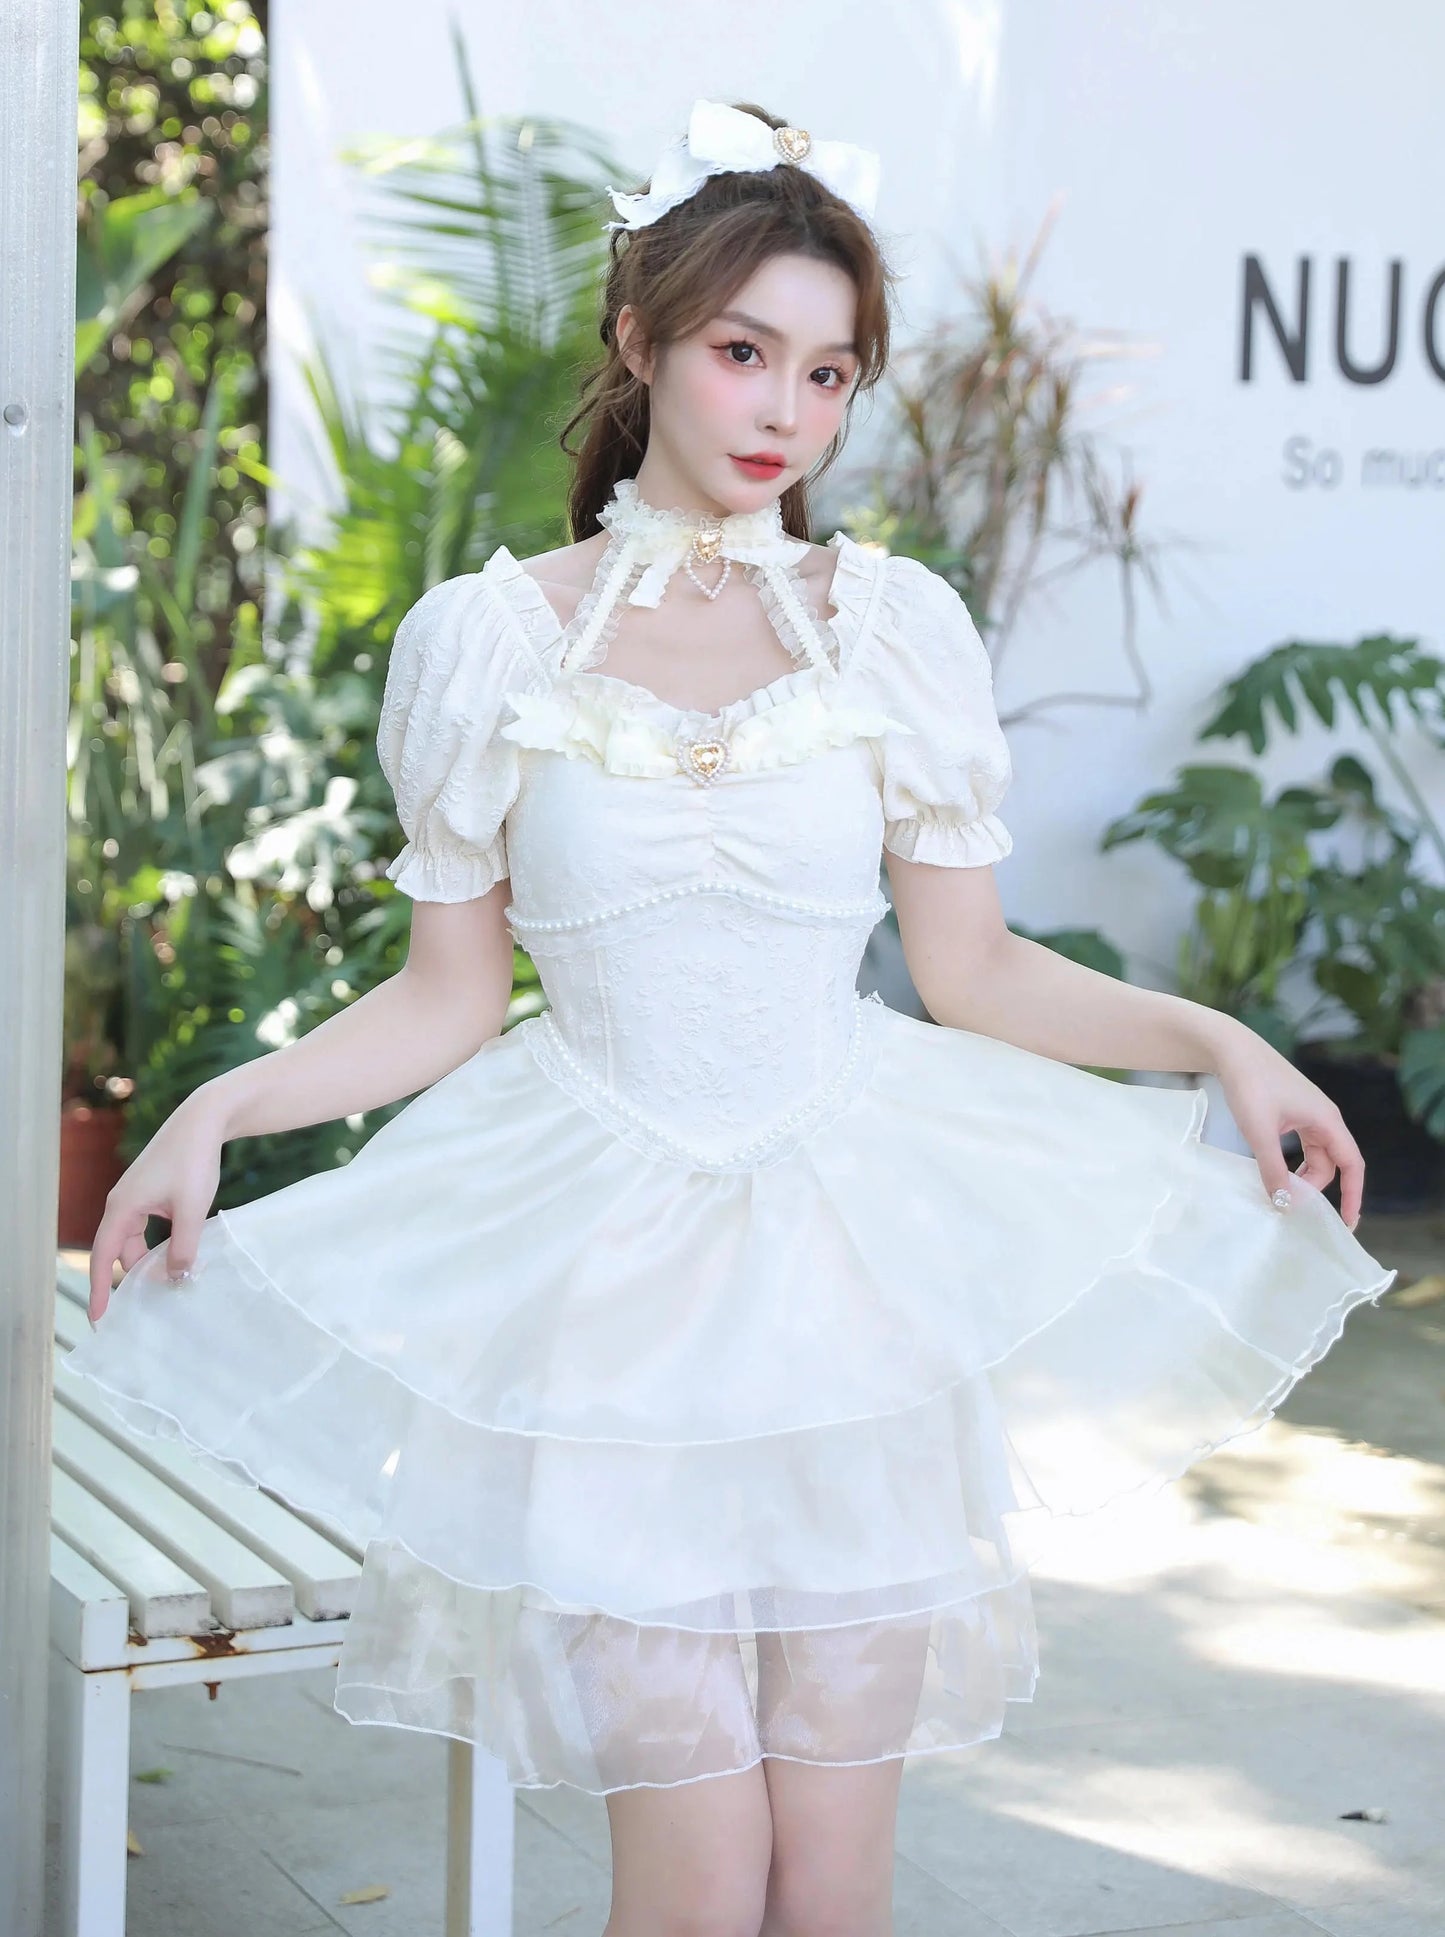 Pure White Sweet Girly Dress